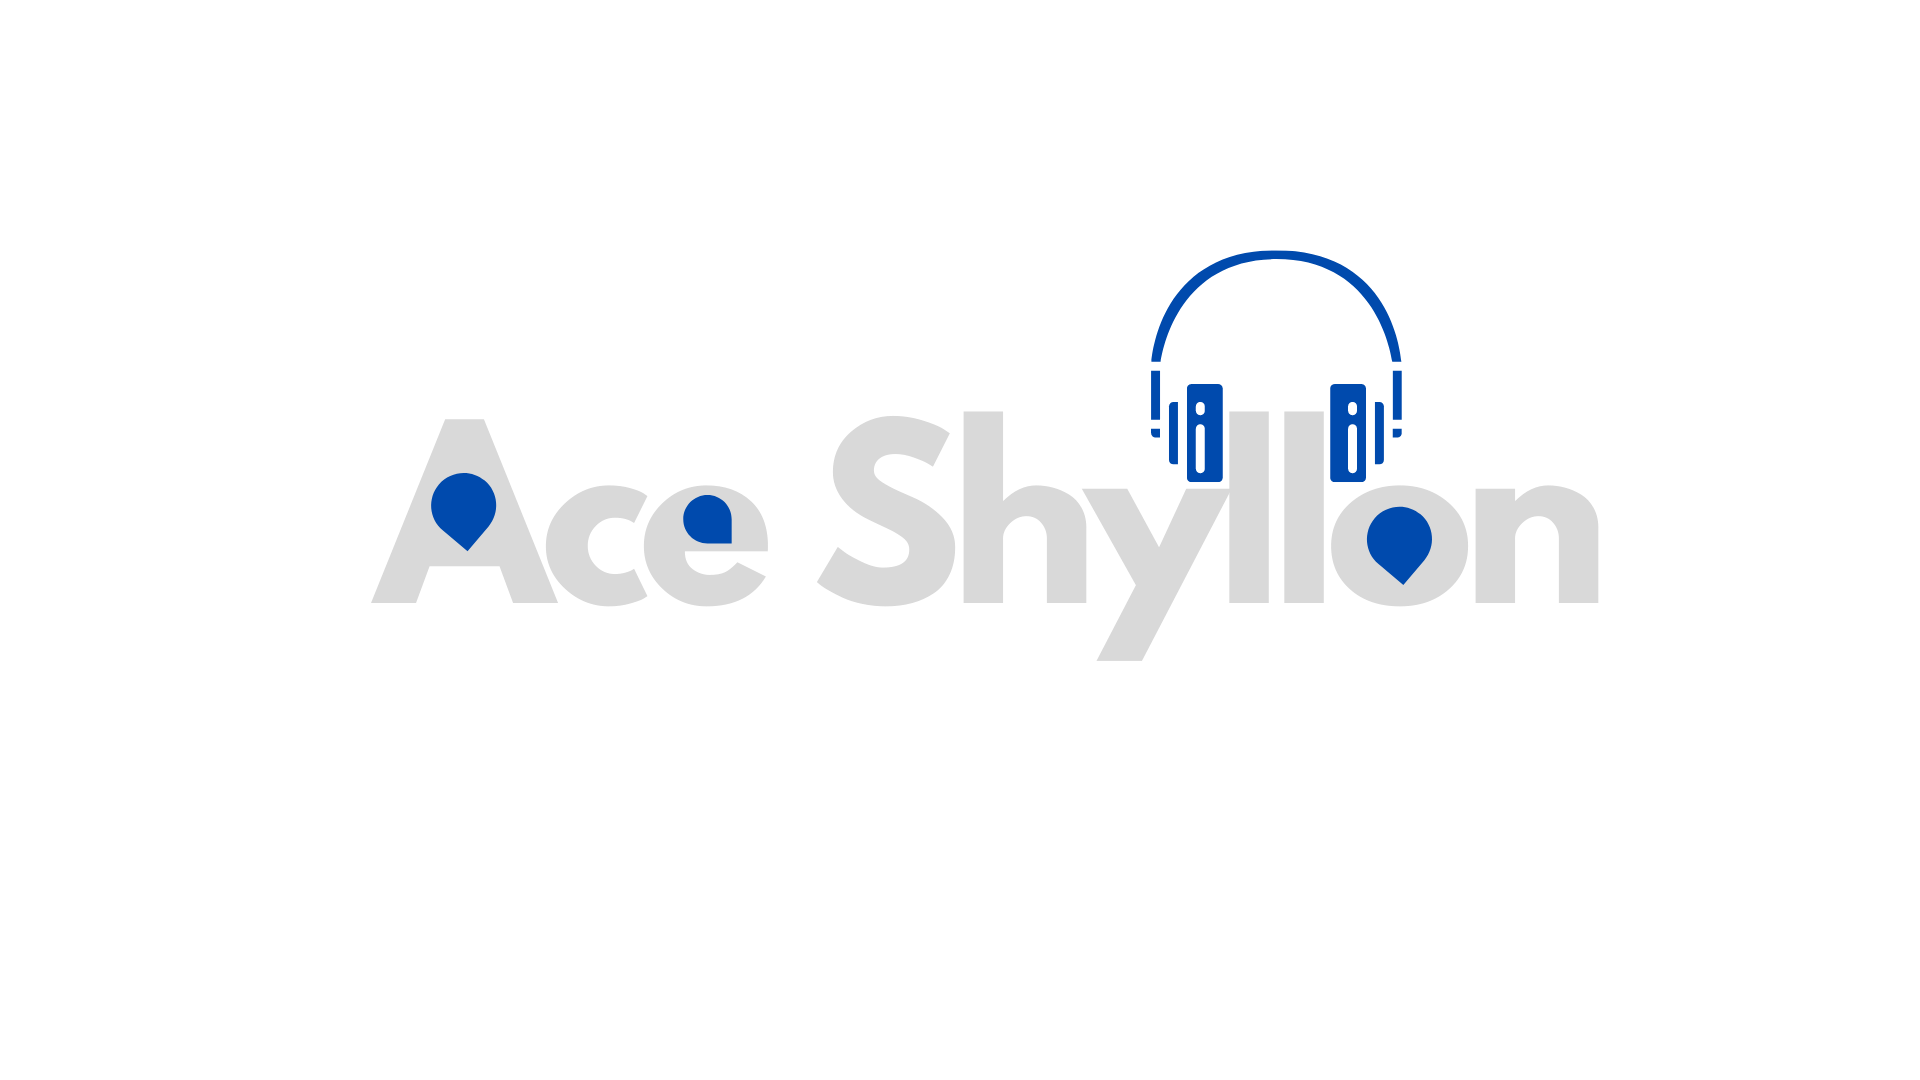 ACE SHYLLON